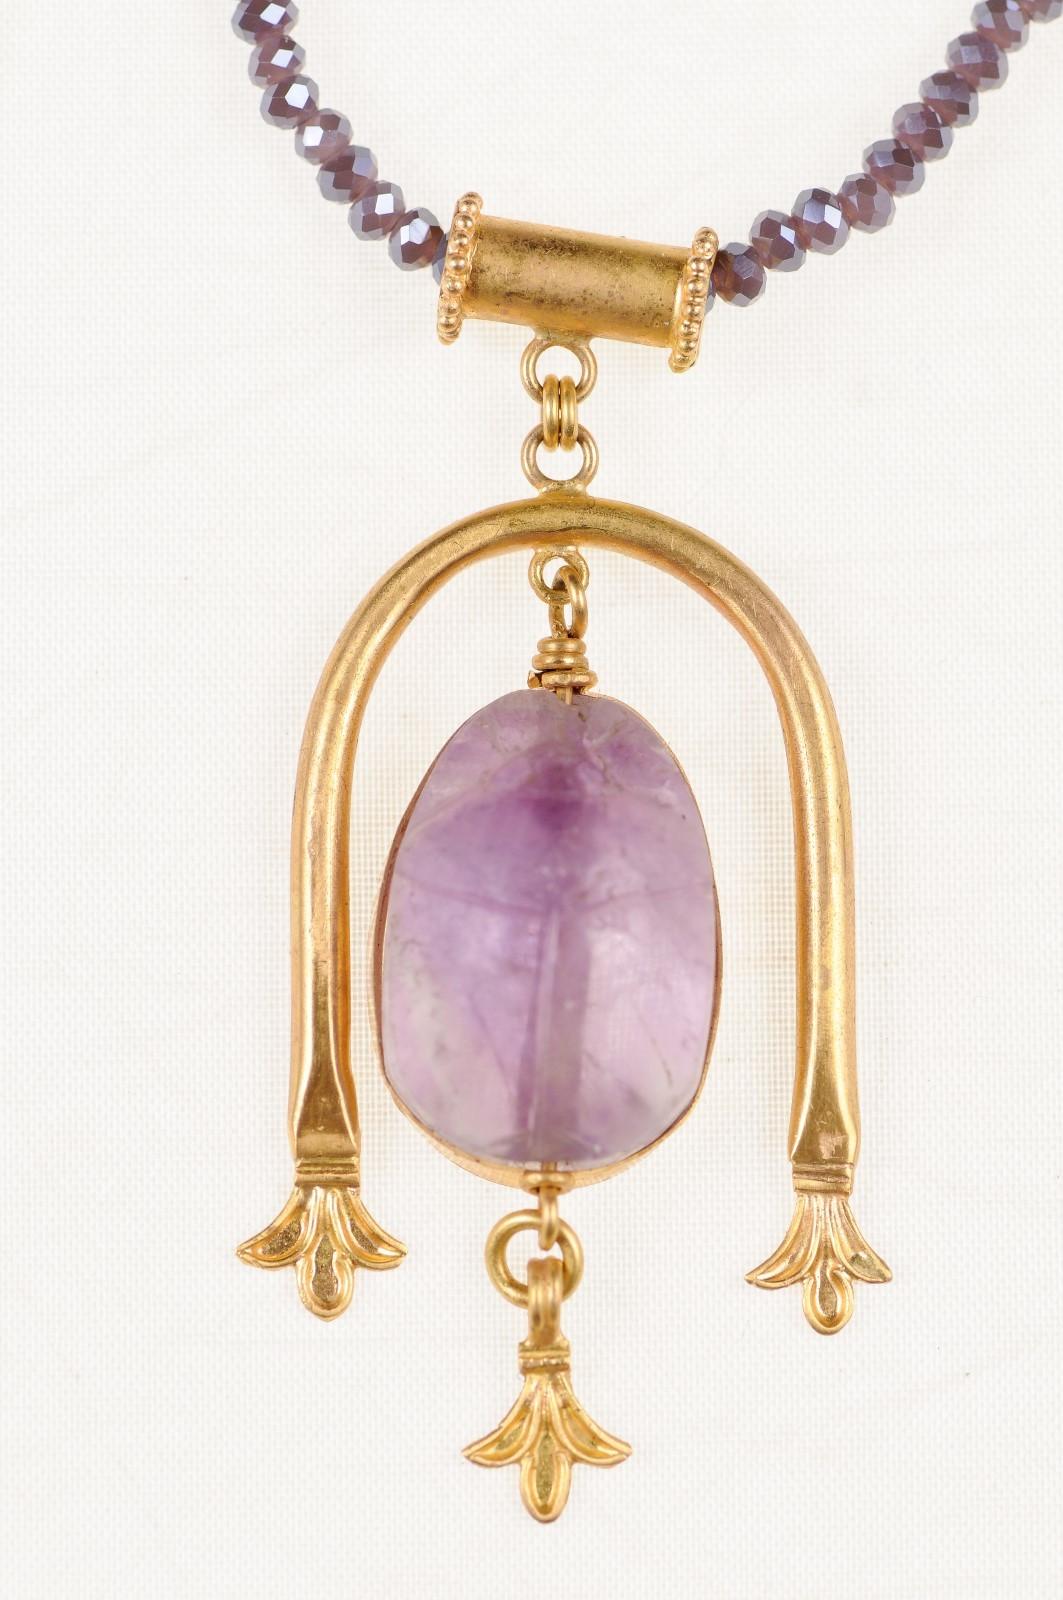 Roman Egypt Scarab & 21k Gold Pendant (pendant only) For Sale 3